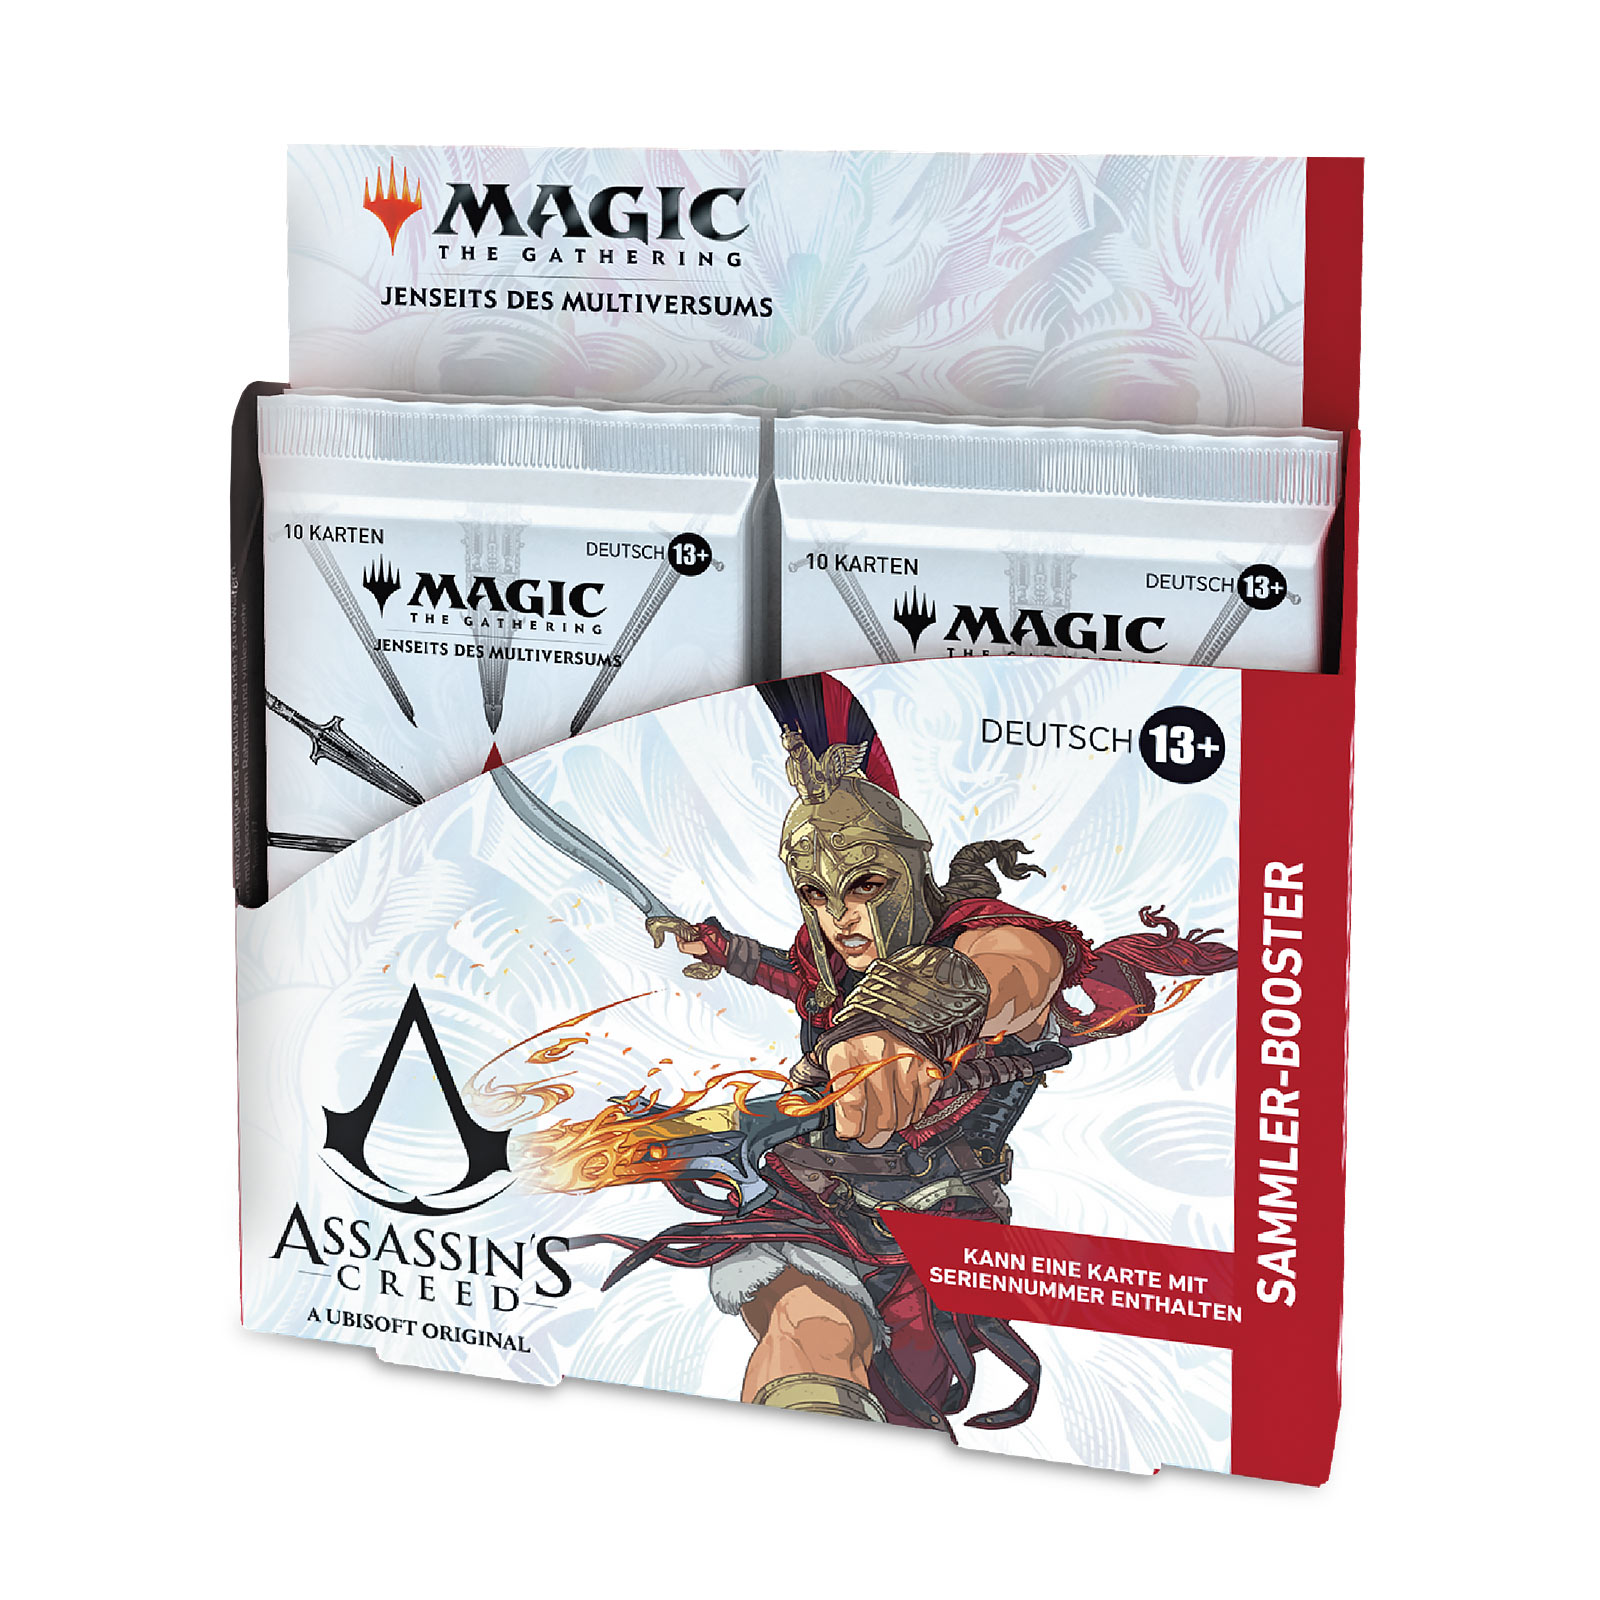 Assassin's Creed Verzamelaar Booster Display - Magic The Gathering